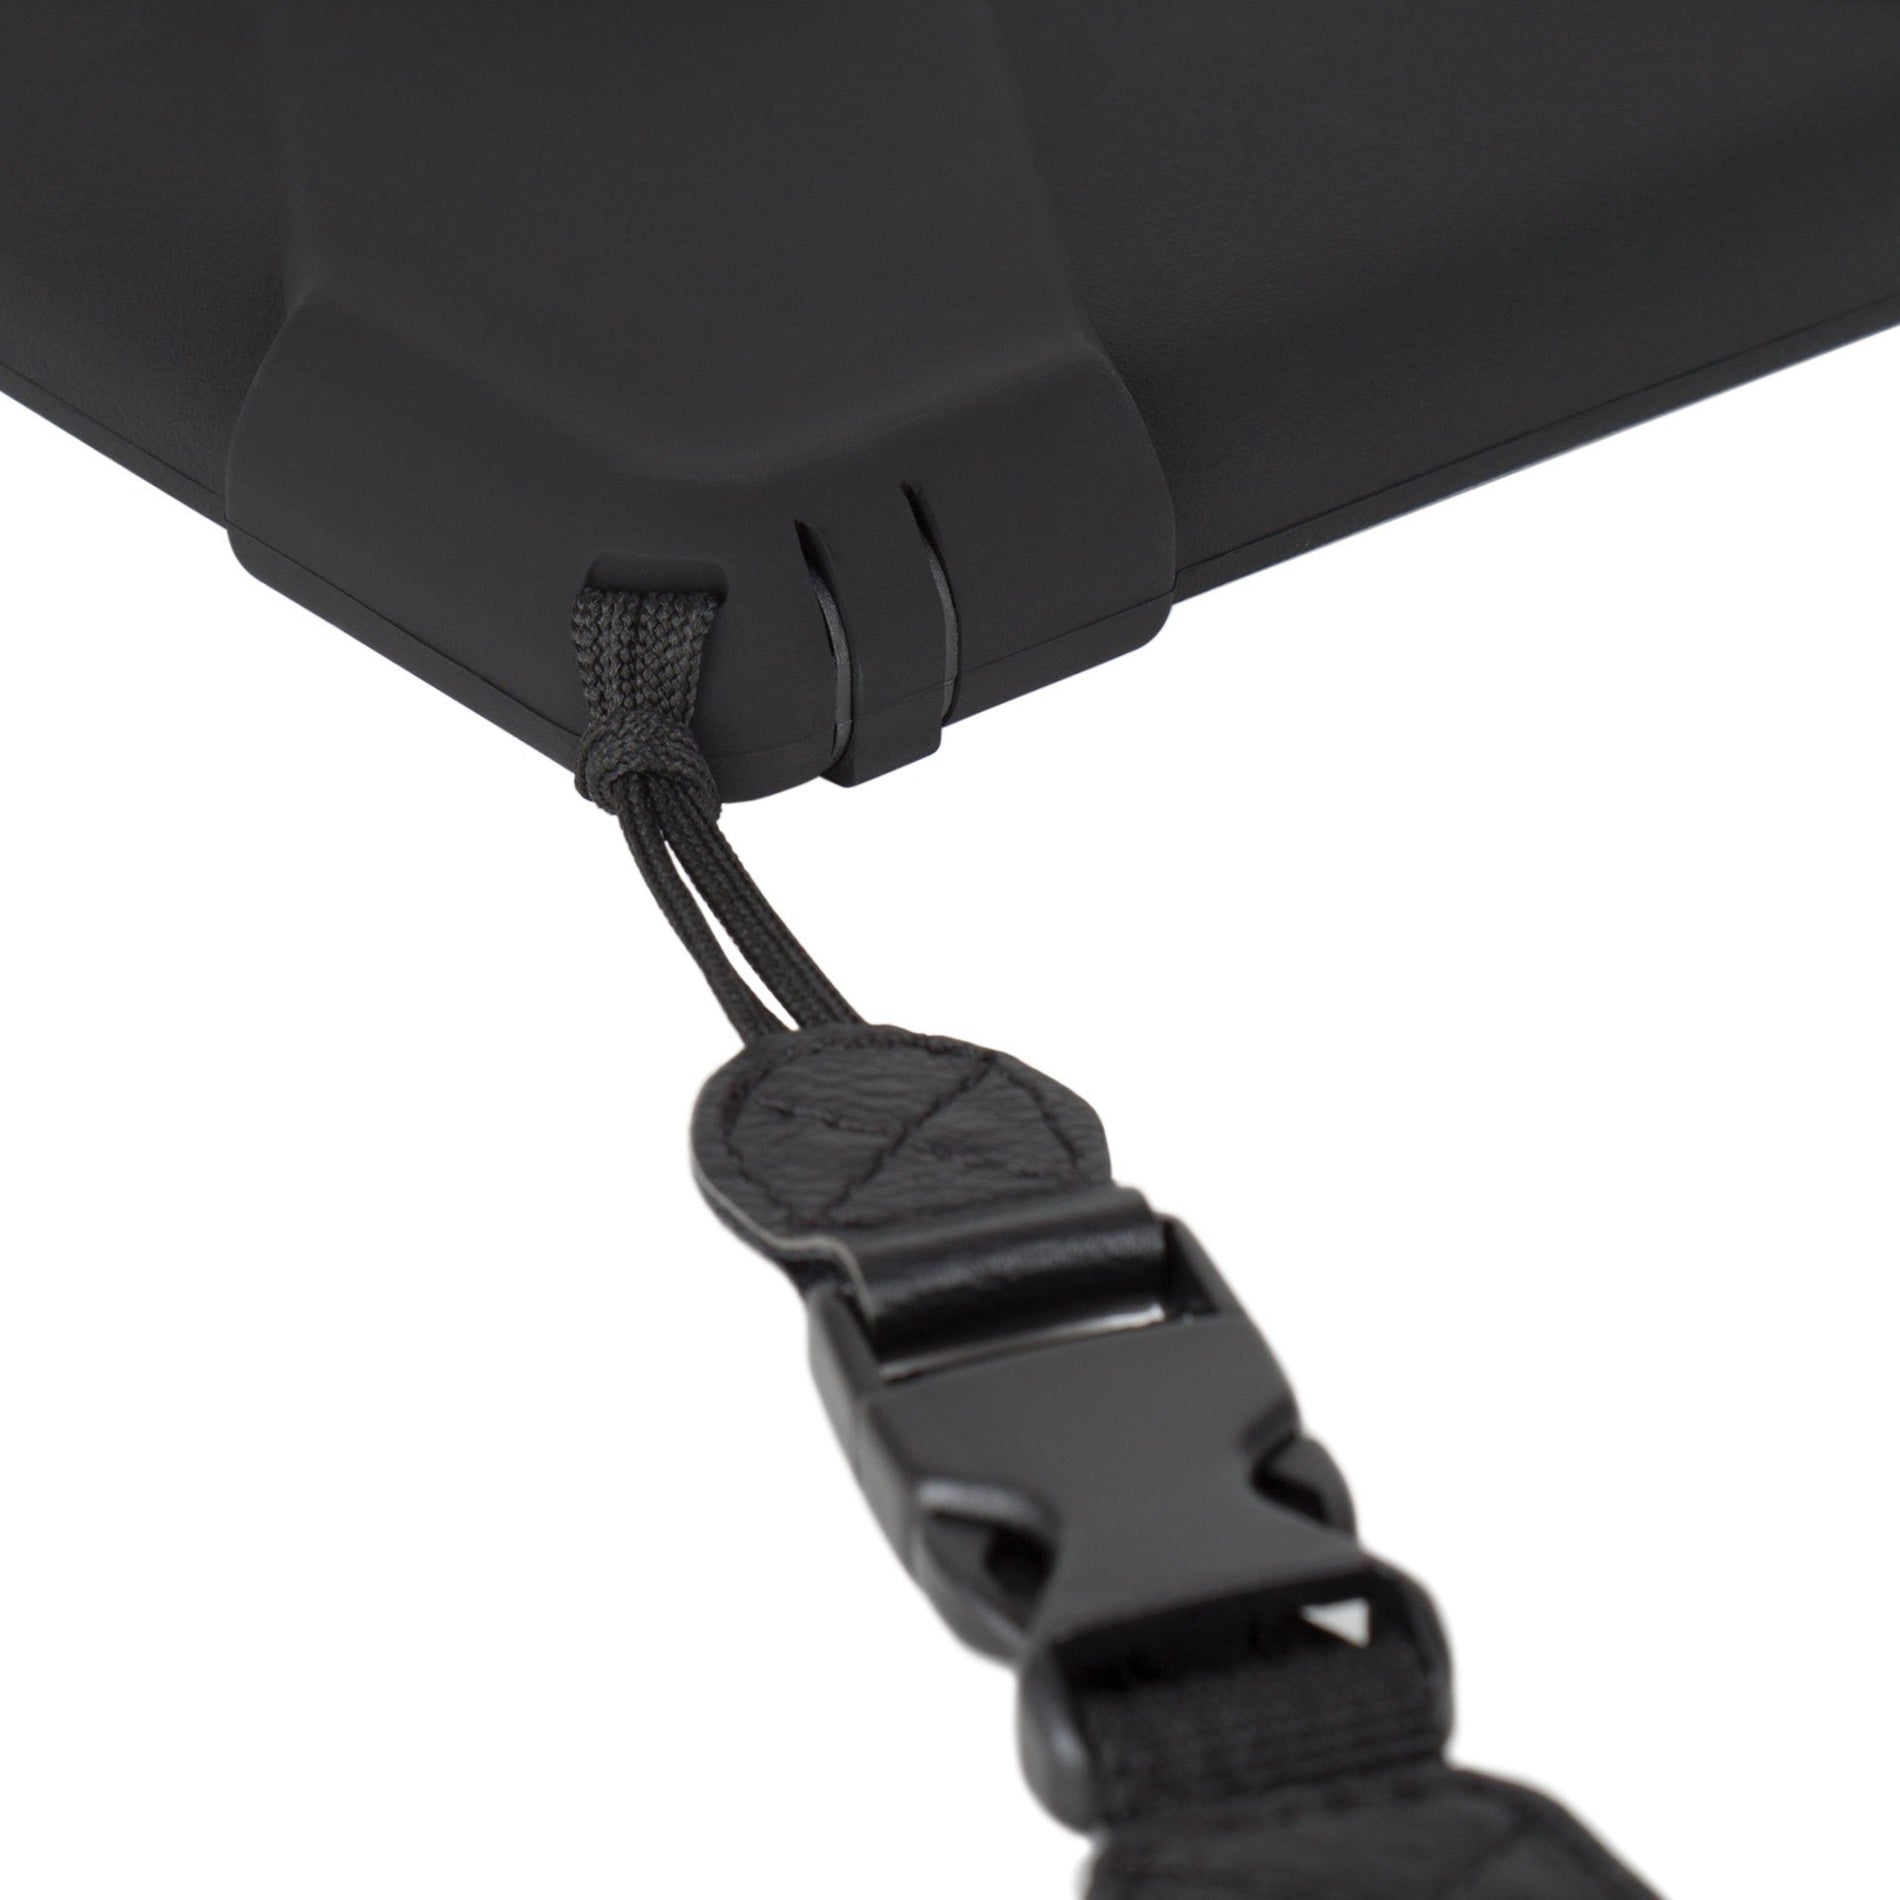 The Joy Factory CWX202 Universal Shoulder Strap II, Adjustable, Black Leather/Nylon